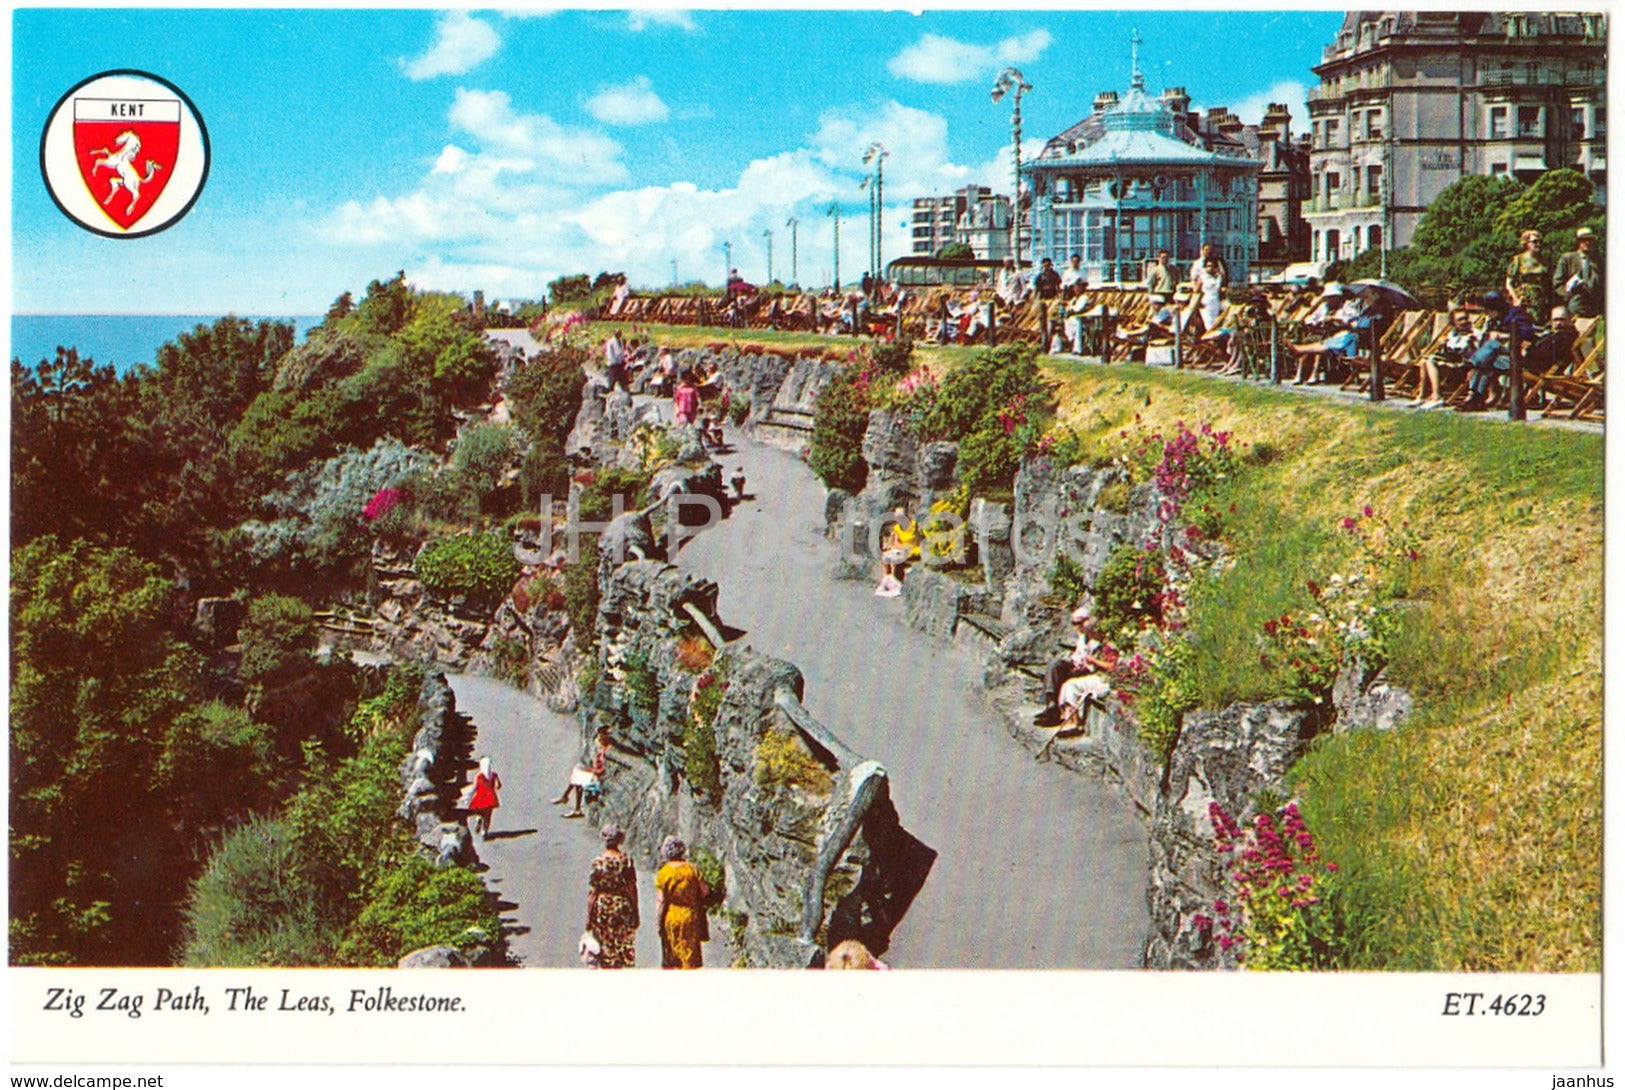 Folkestone - The Zig Zag Path - The Leas - ET4623 - 1985 - United Kingdom - England - used - JH Postcards